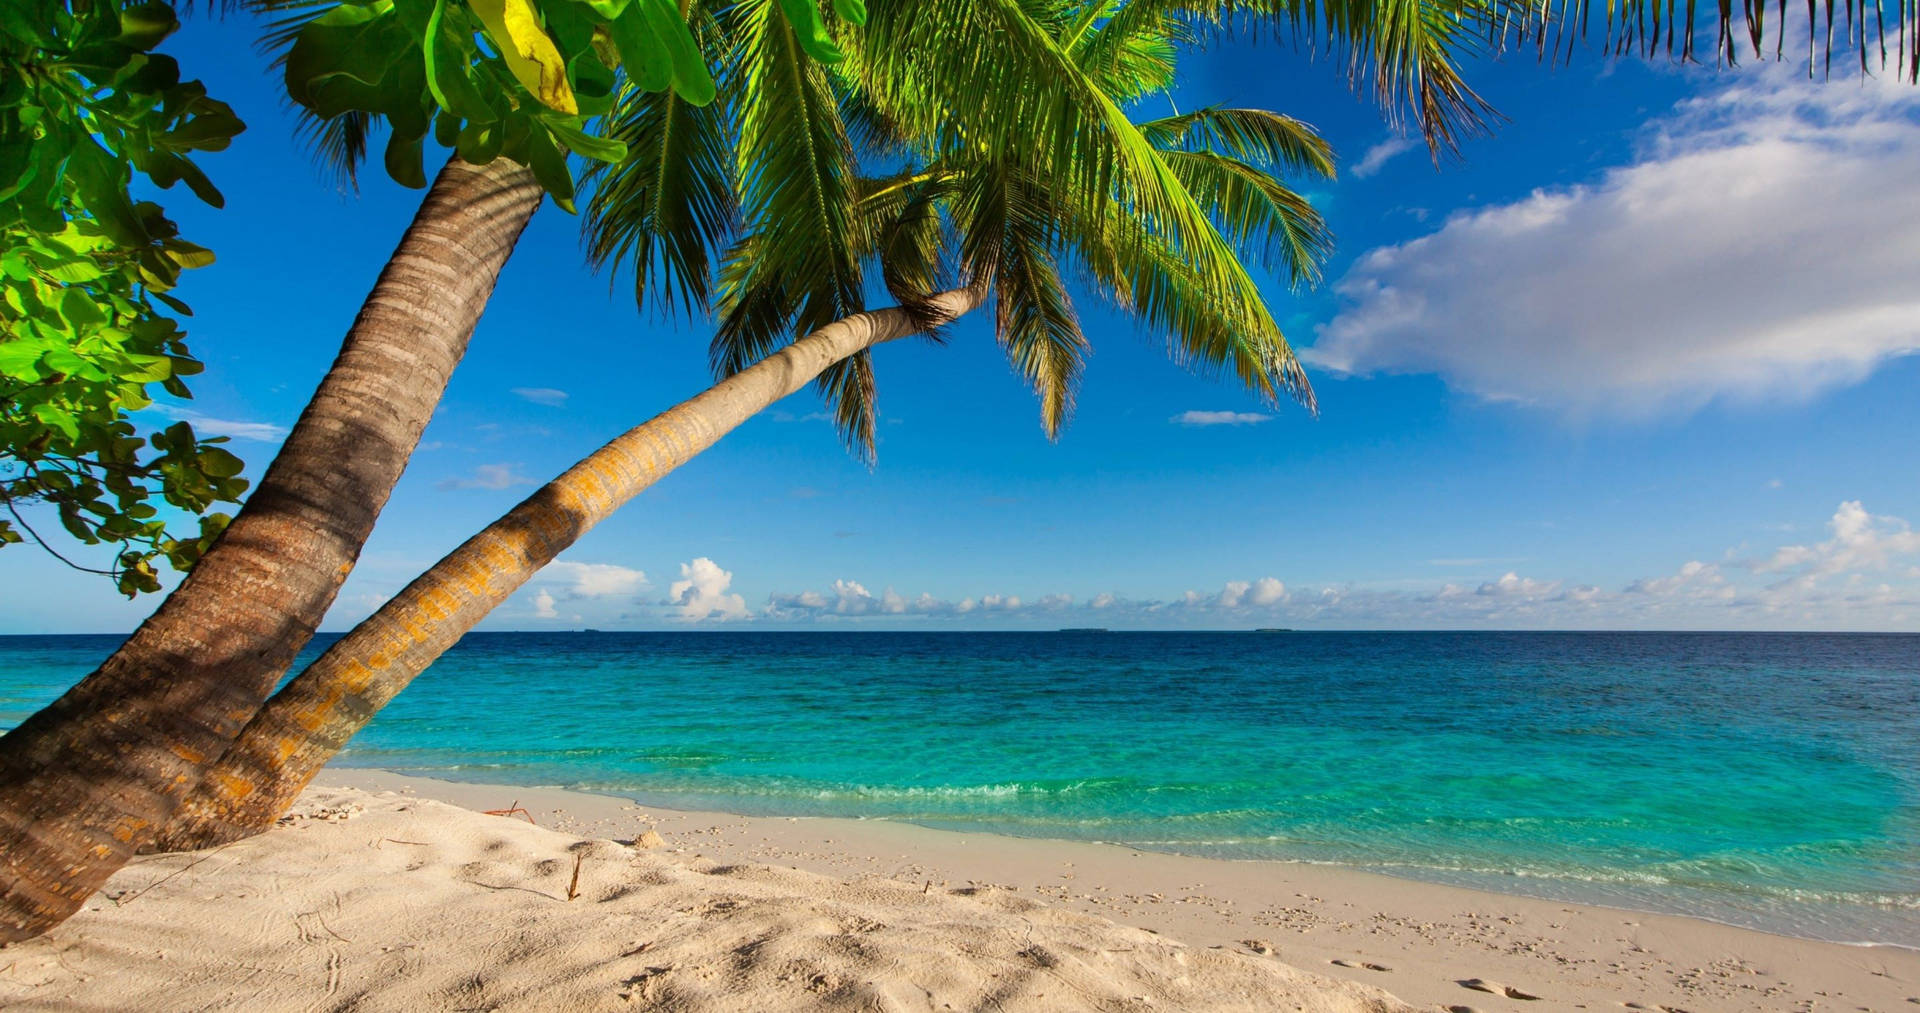 4k Beach With Palm Tree Background